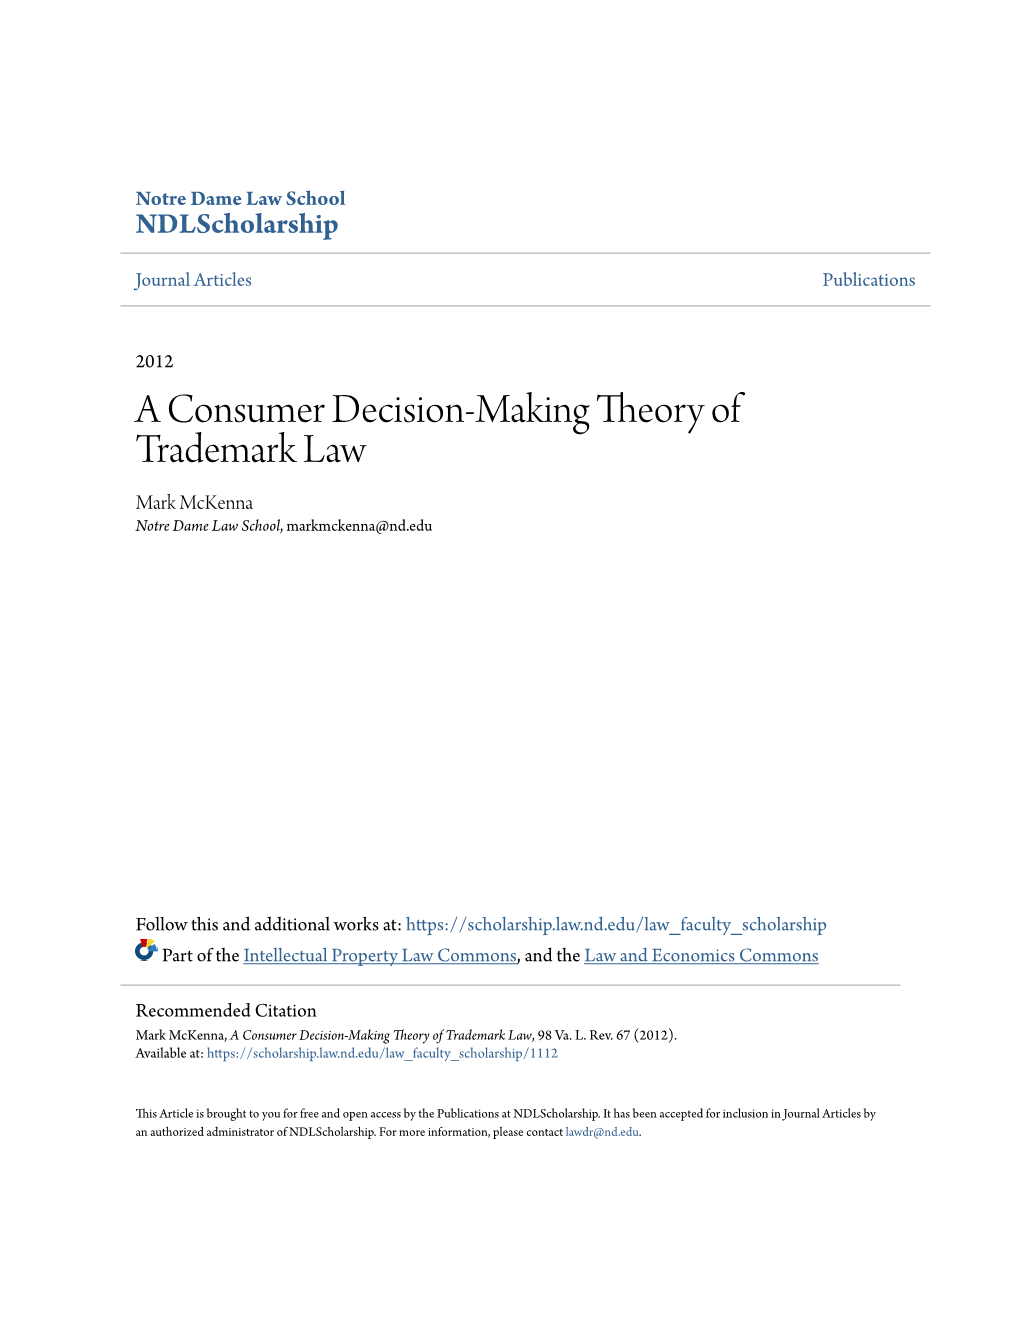 A Consumer Decision-Making Theory of Trademark Law Mark Mckenna Notre Dame Law School, Markmckenna@Nd.Edu